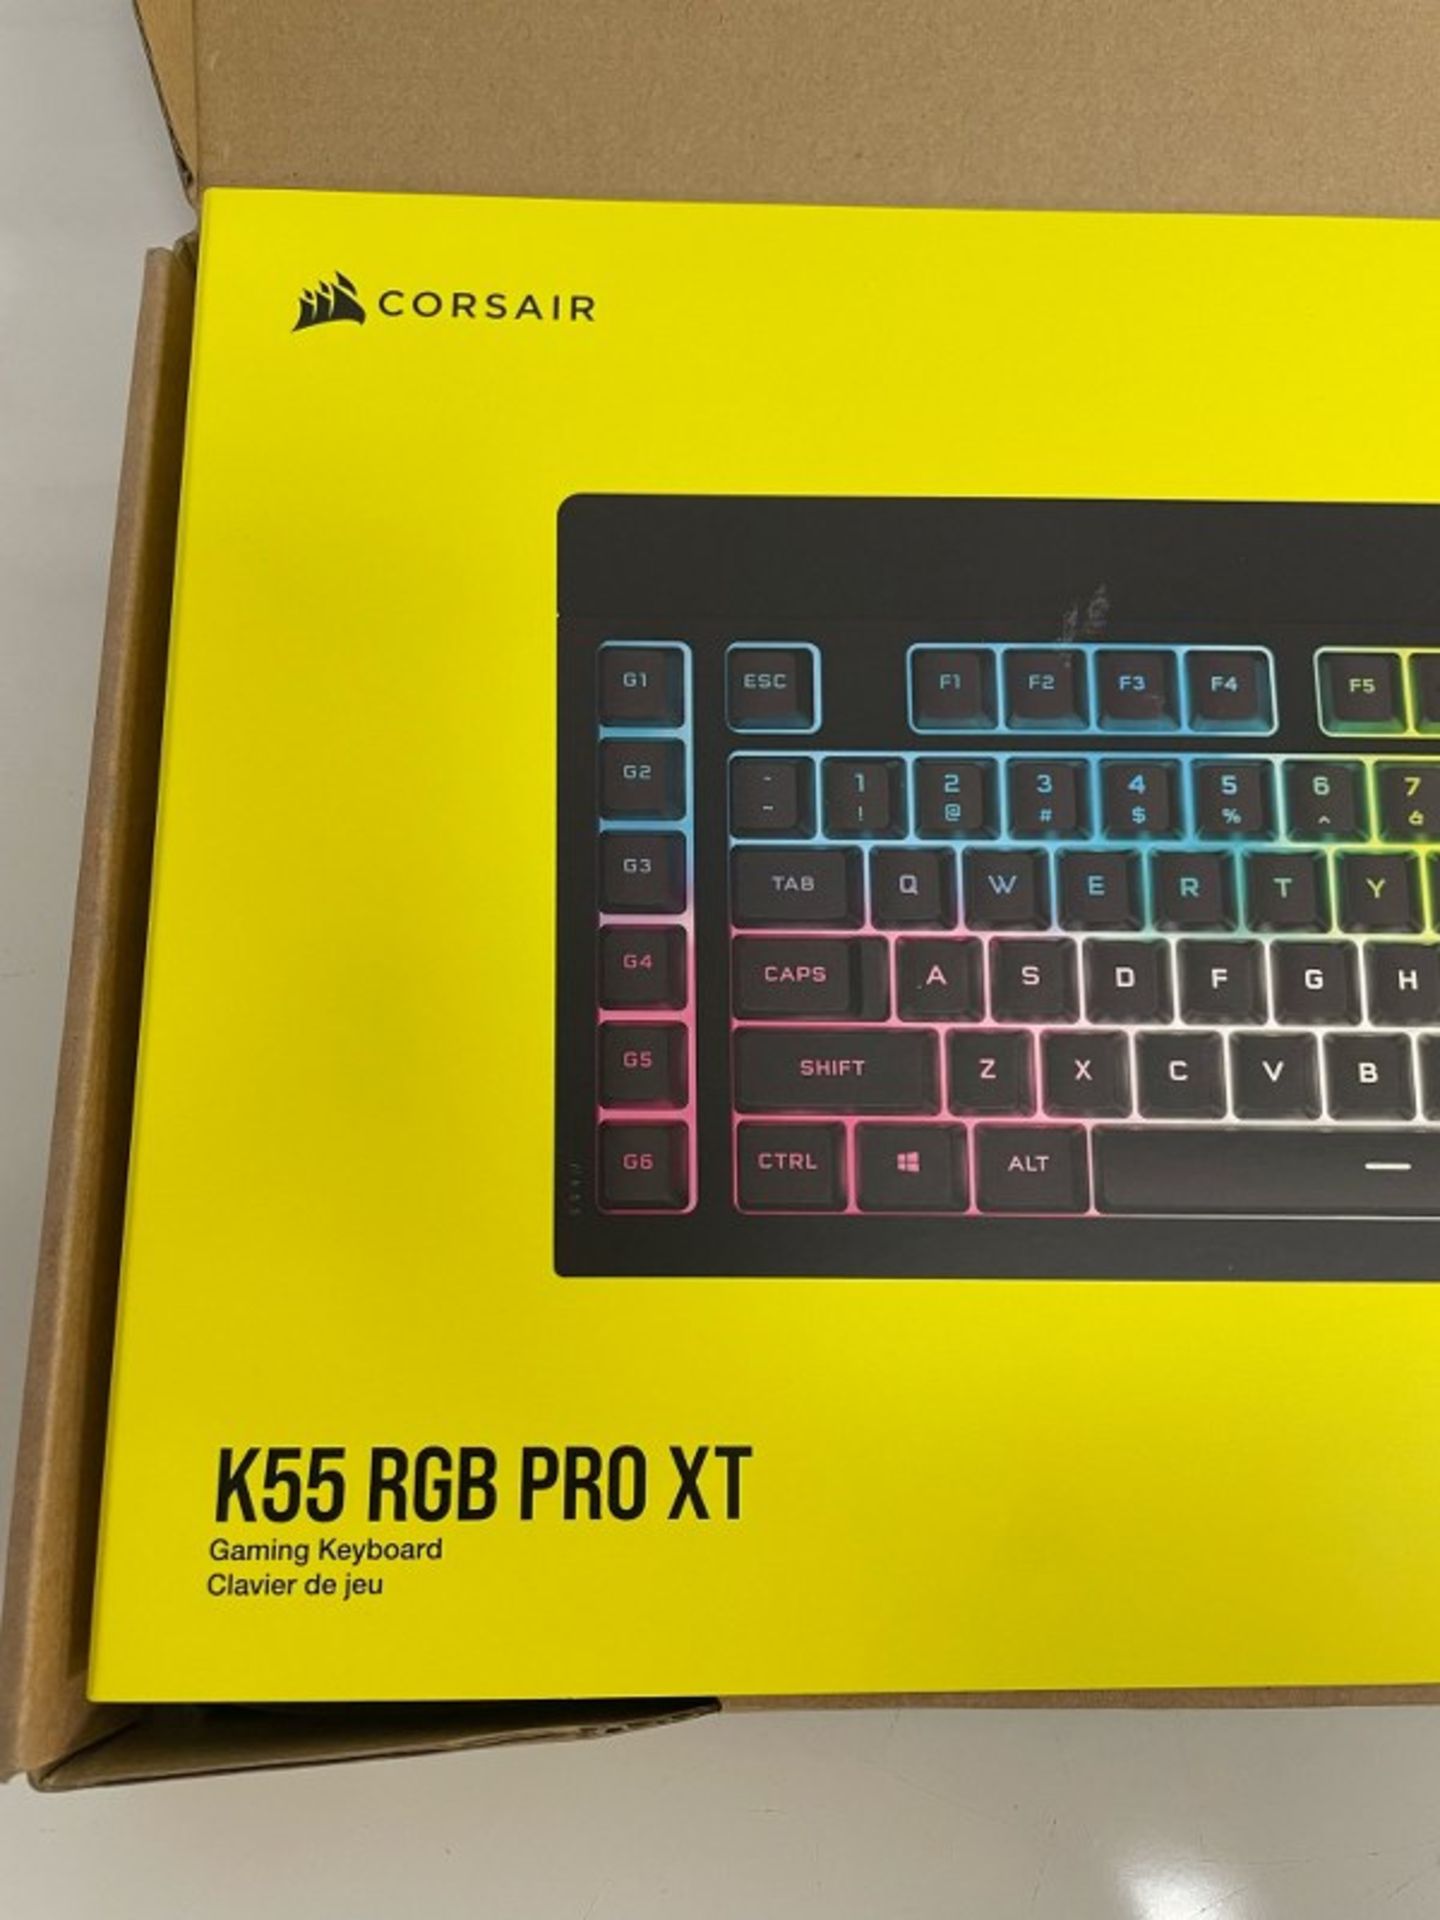 Corsair - K55 RGB PRO XT Gaming Keyboard - Image 2 of 2